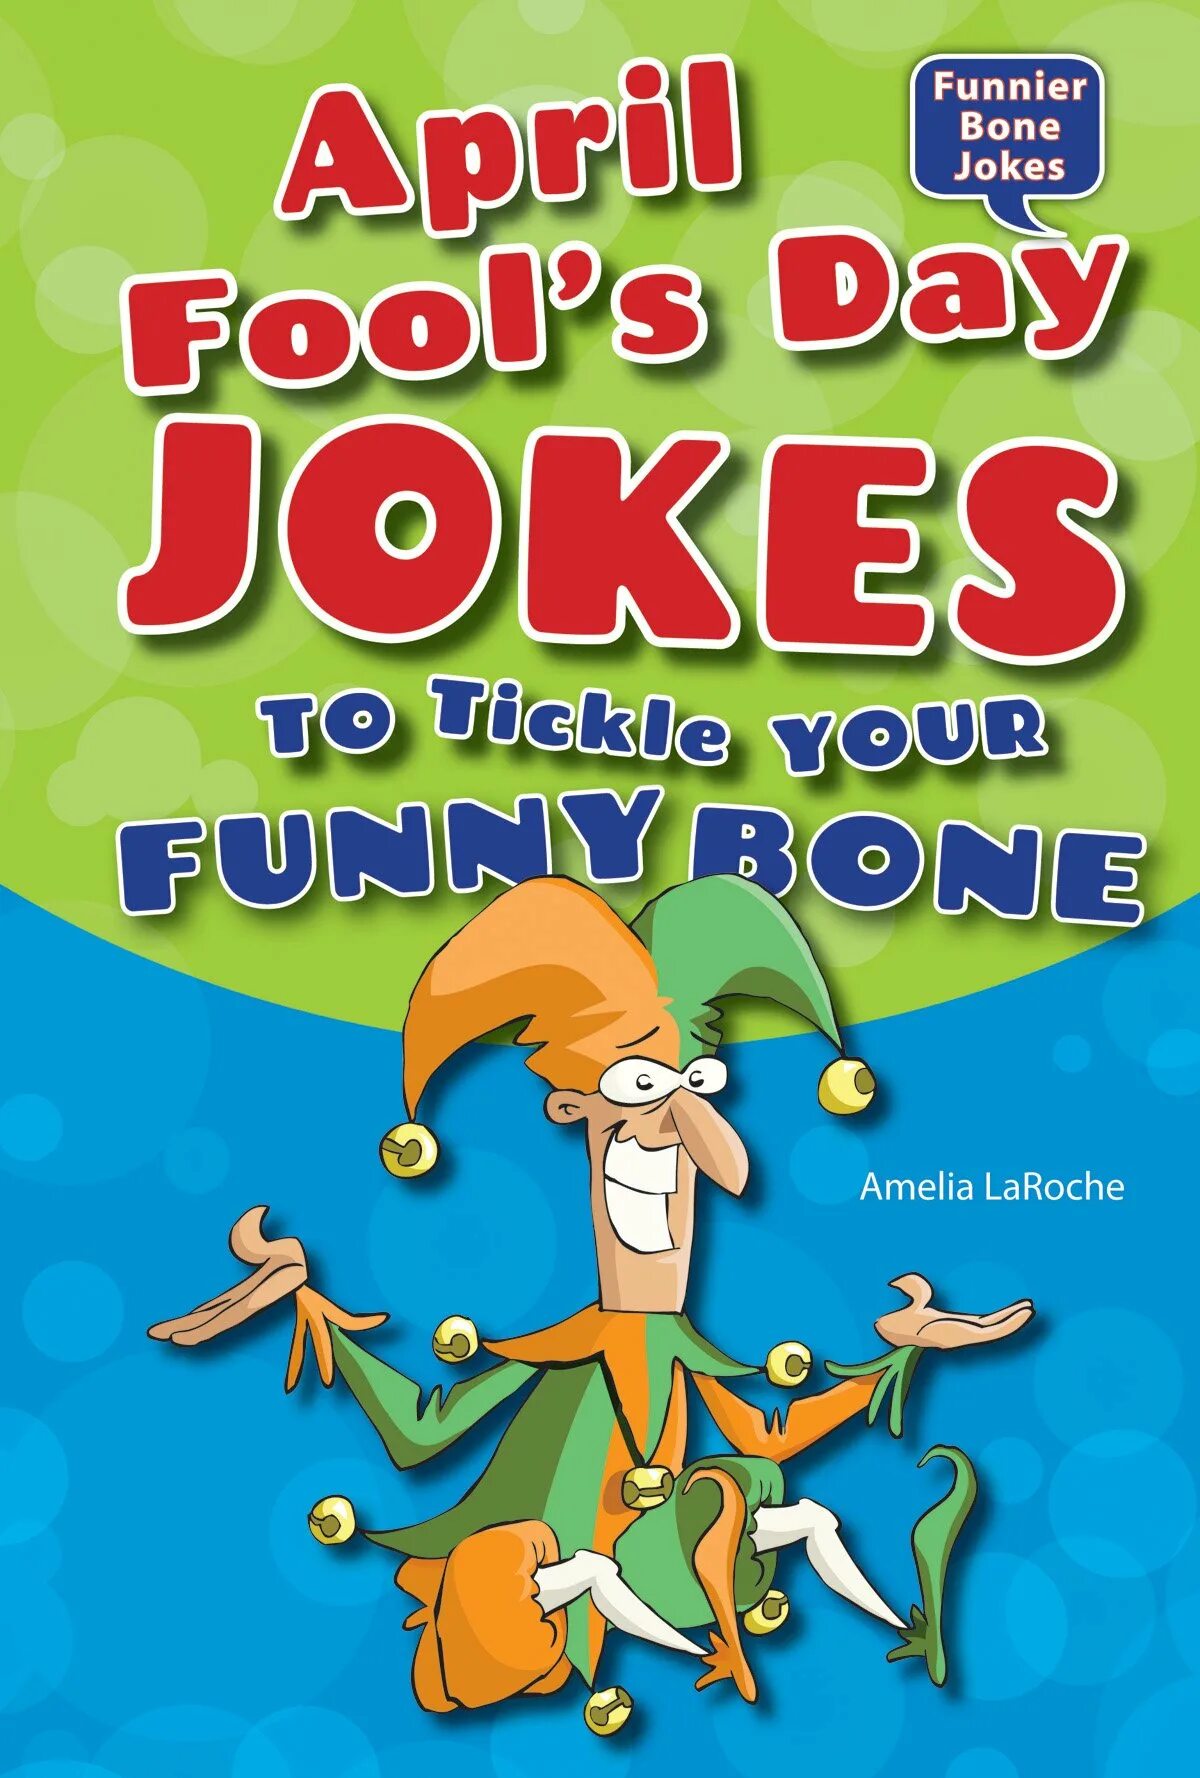 April jokes. April Fool's Day jokes. Fools Day jokes. April Fool's Day tongue Twisters. April Fool's Day jokes in English.